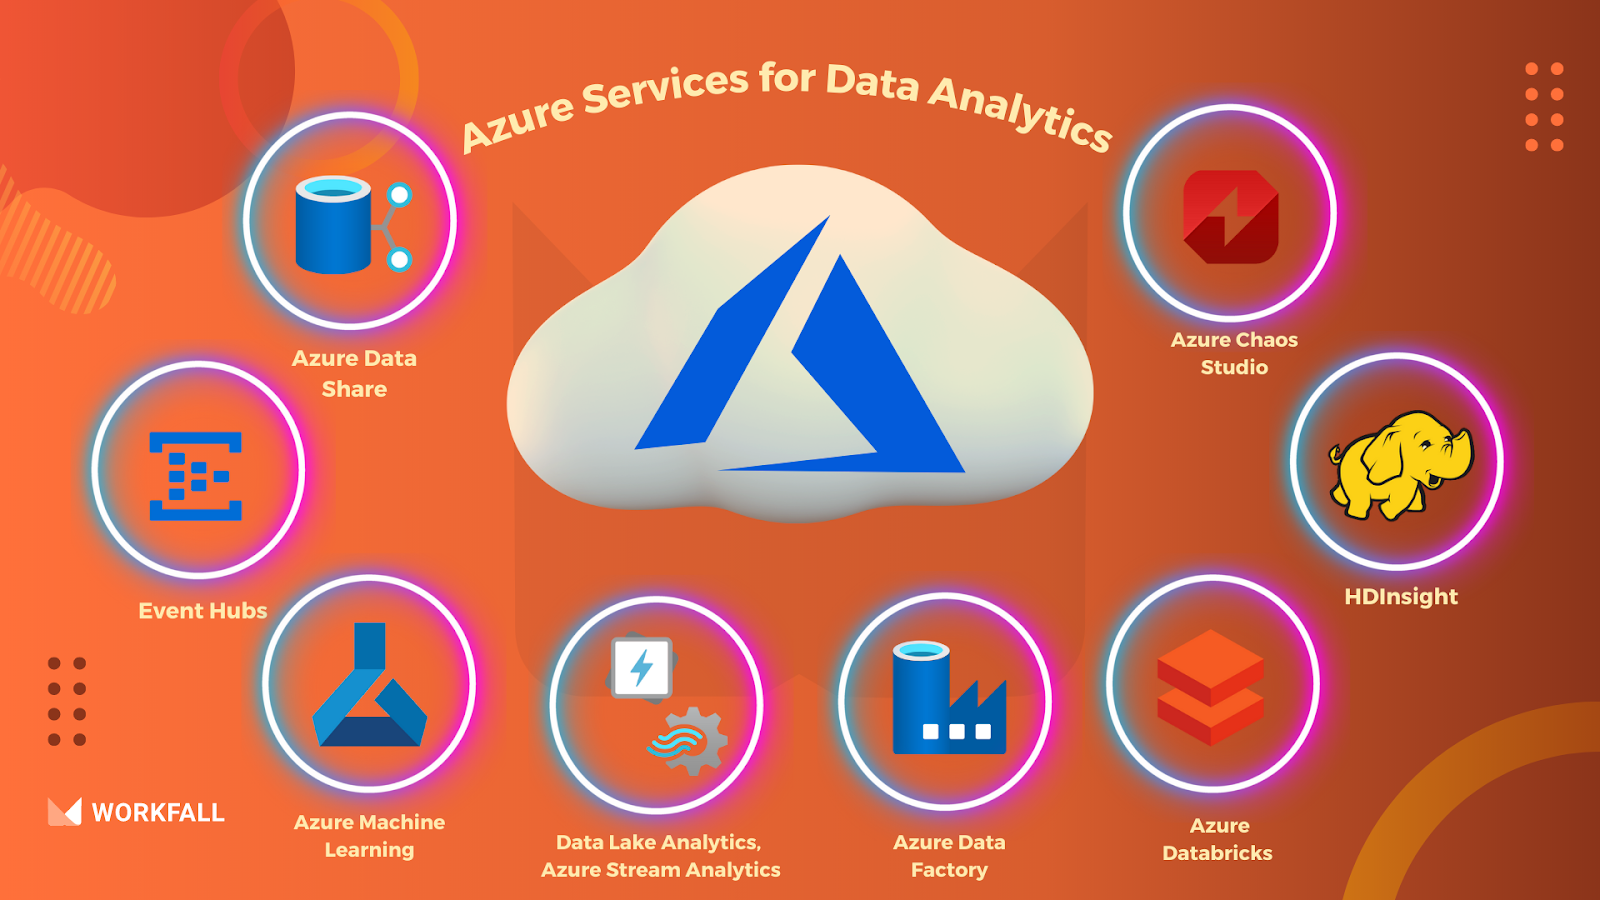 Azure Services for Data Analytics